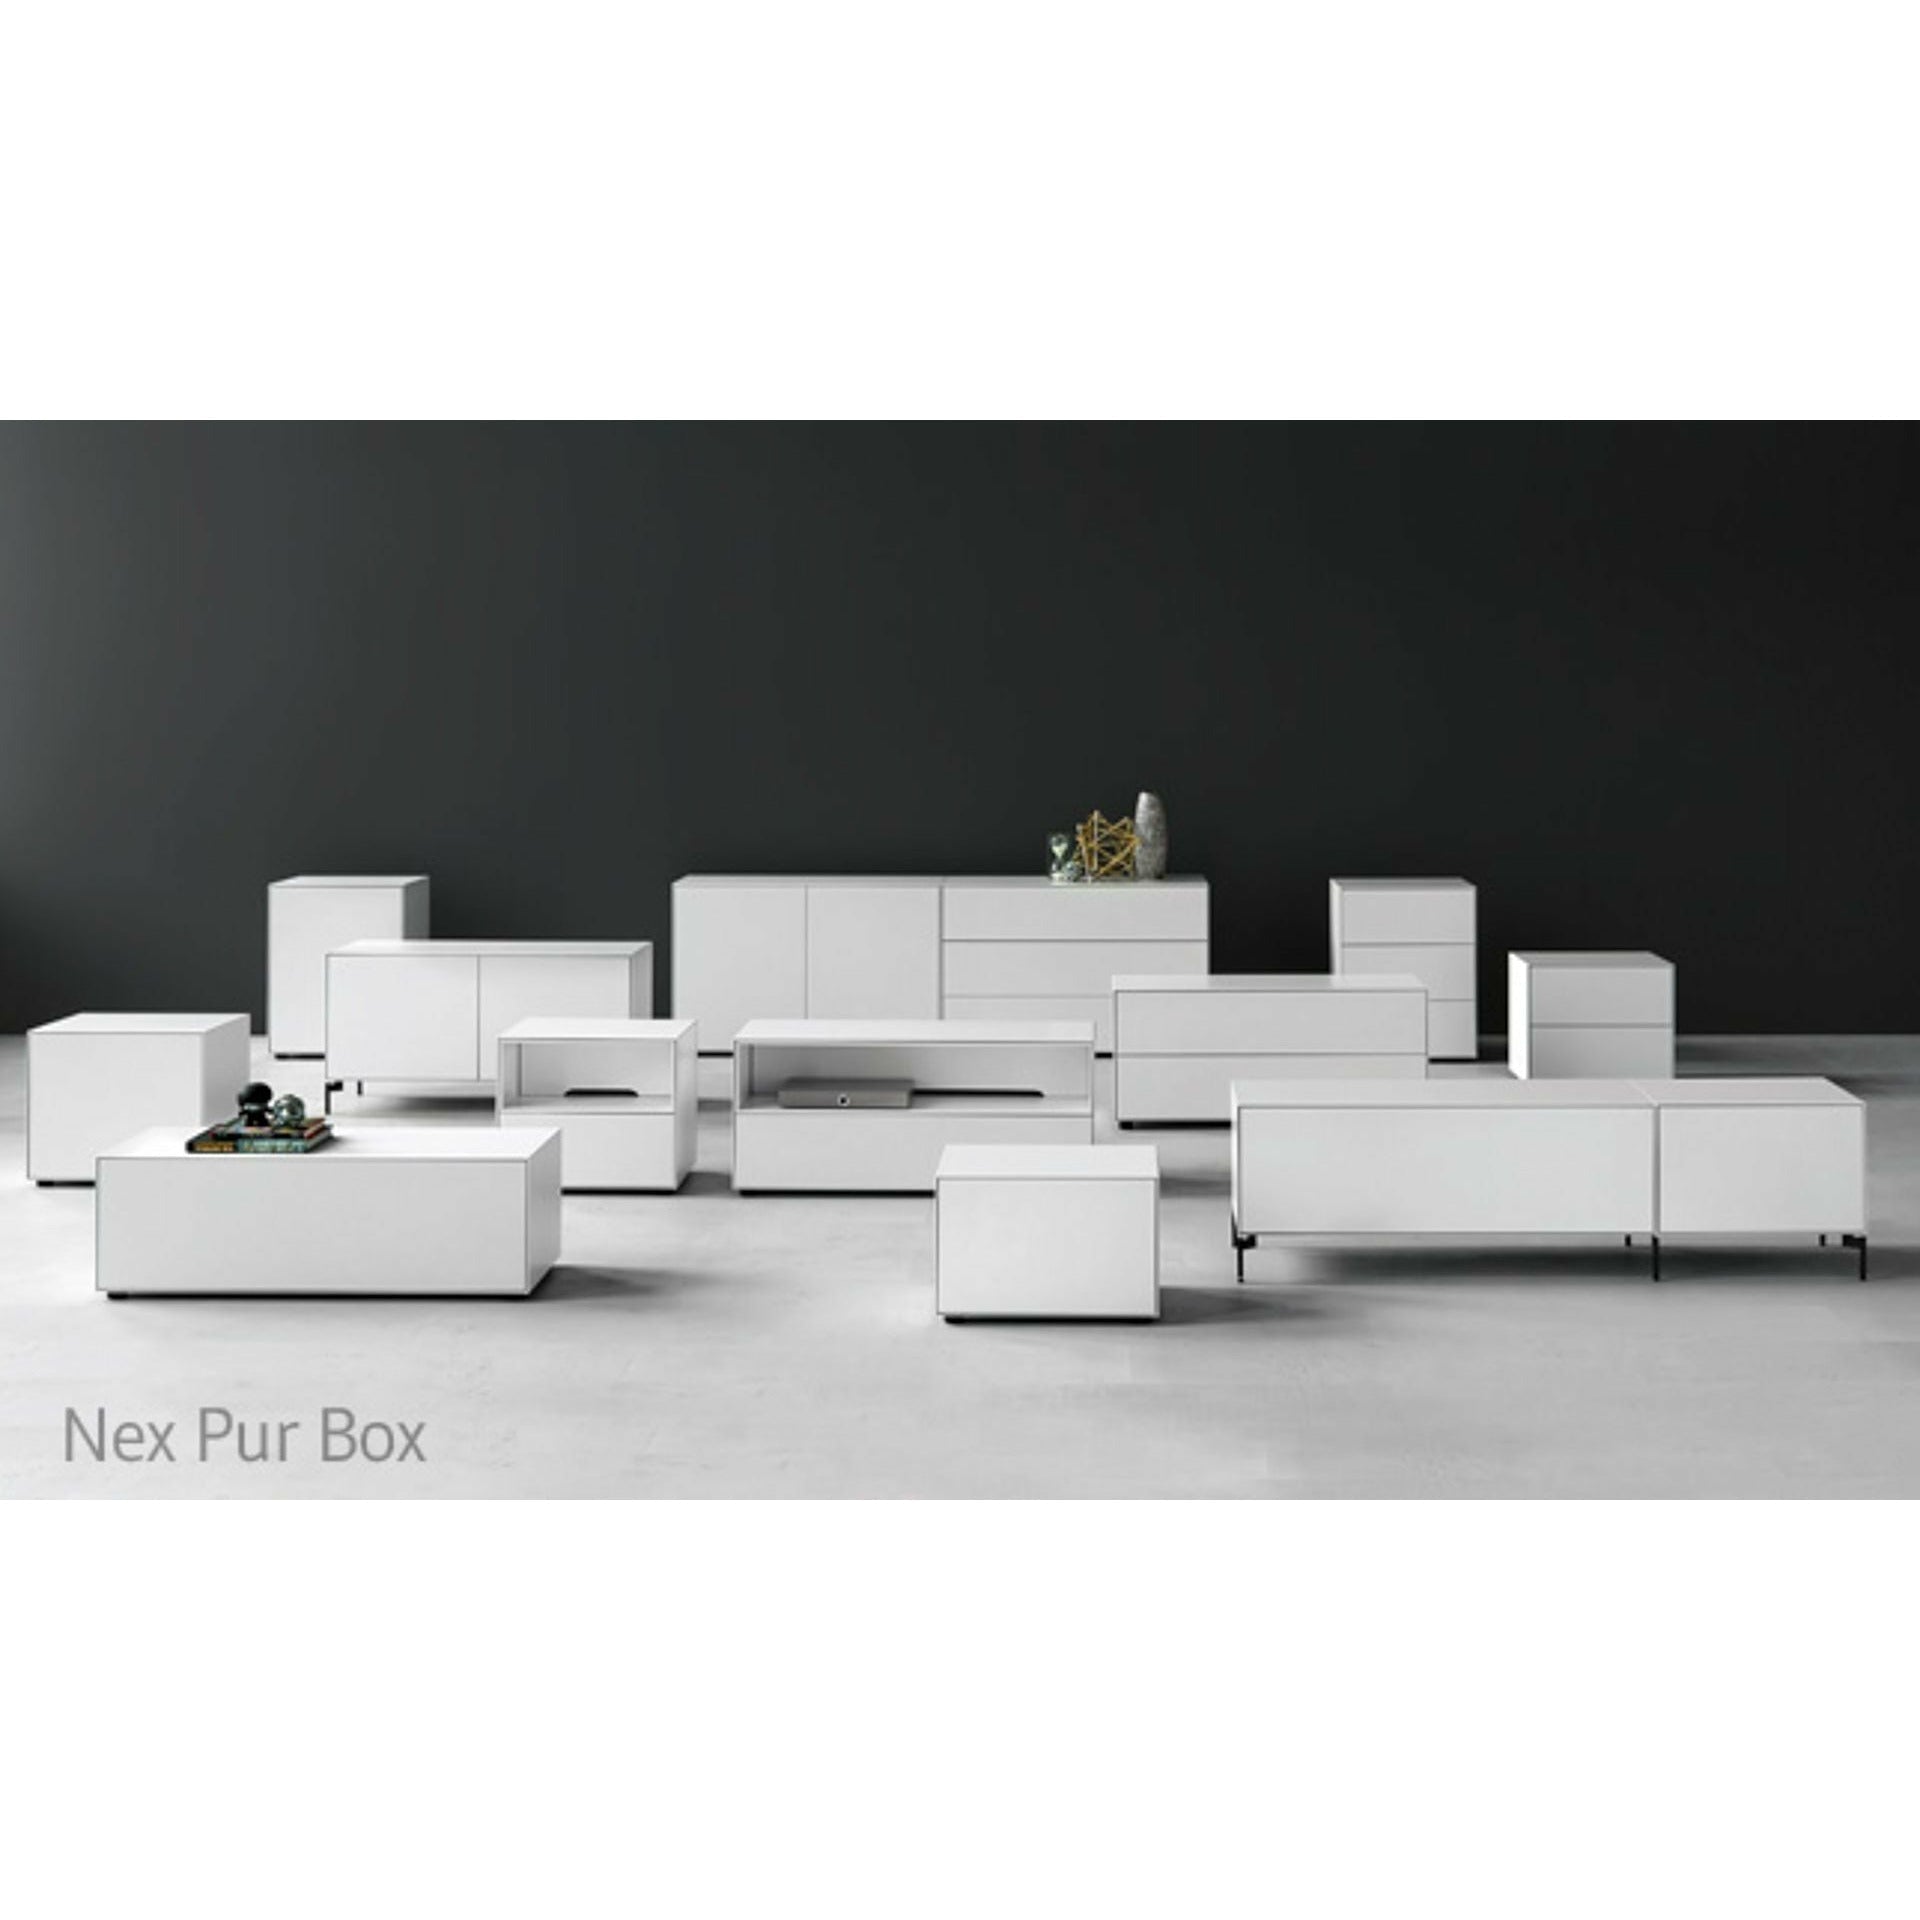 Piure NEX PUR BOX PORTE HX W 75X120 CM, 1 étagère, blanc